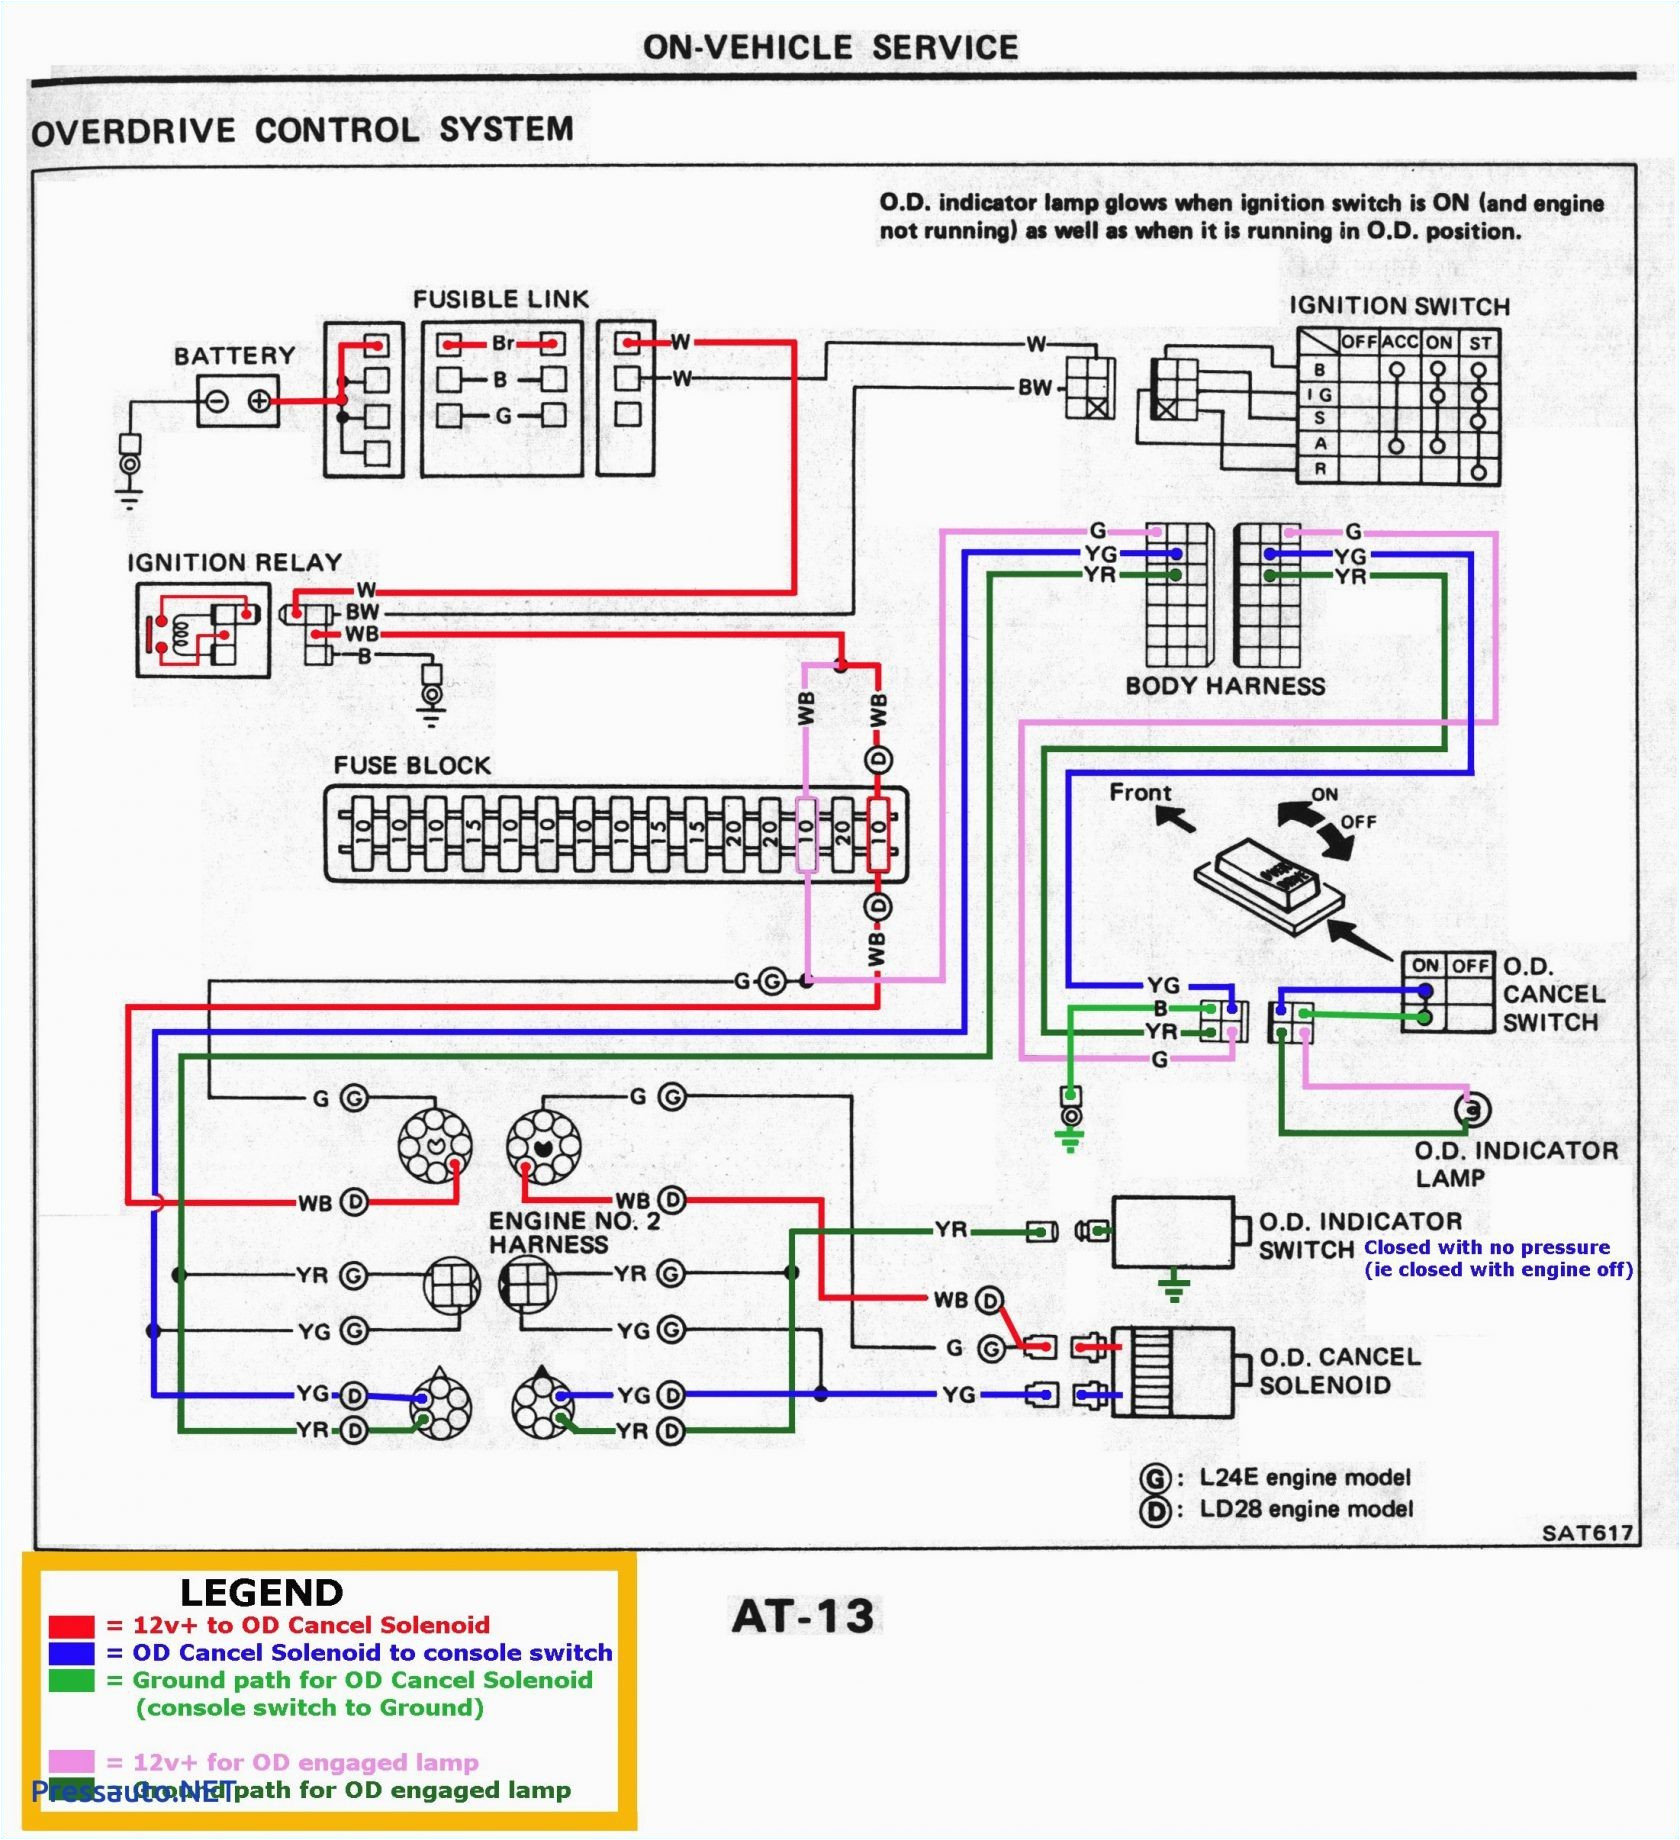 parker trailer wiring diagram wiring diagram autovehicleparker trailer wiring diagram wiring diagram datasourceparker boats wiring diagrams